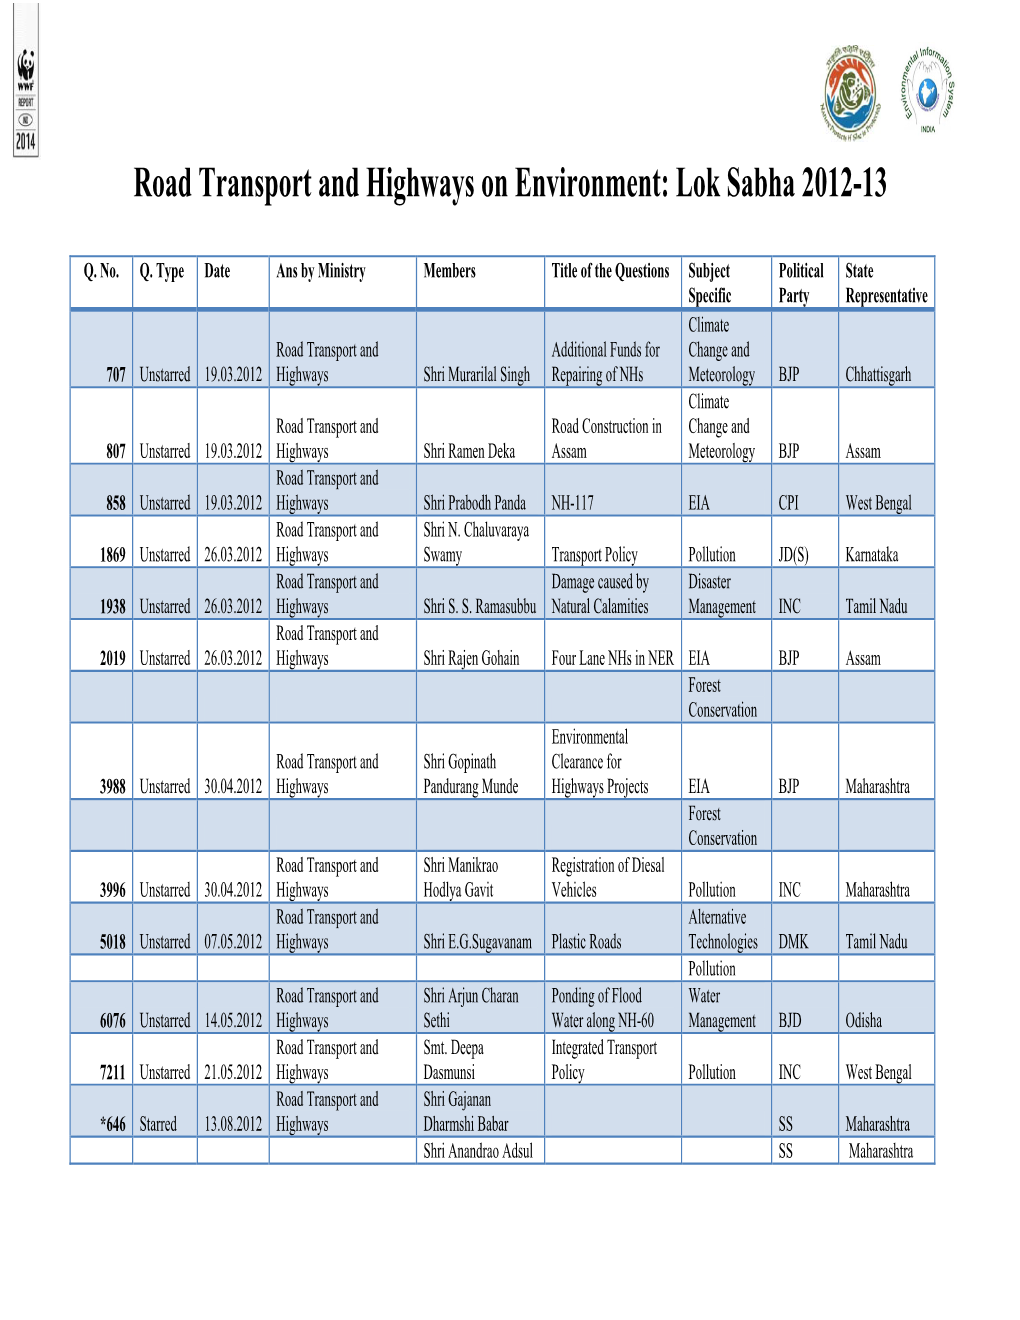 Road Transport and Highways on Environment: Lok Sabha 2012-13